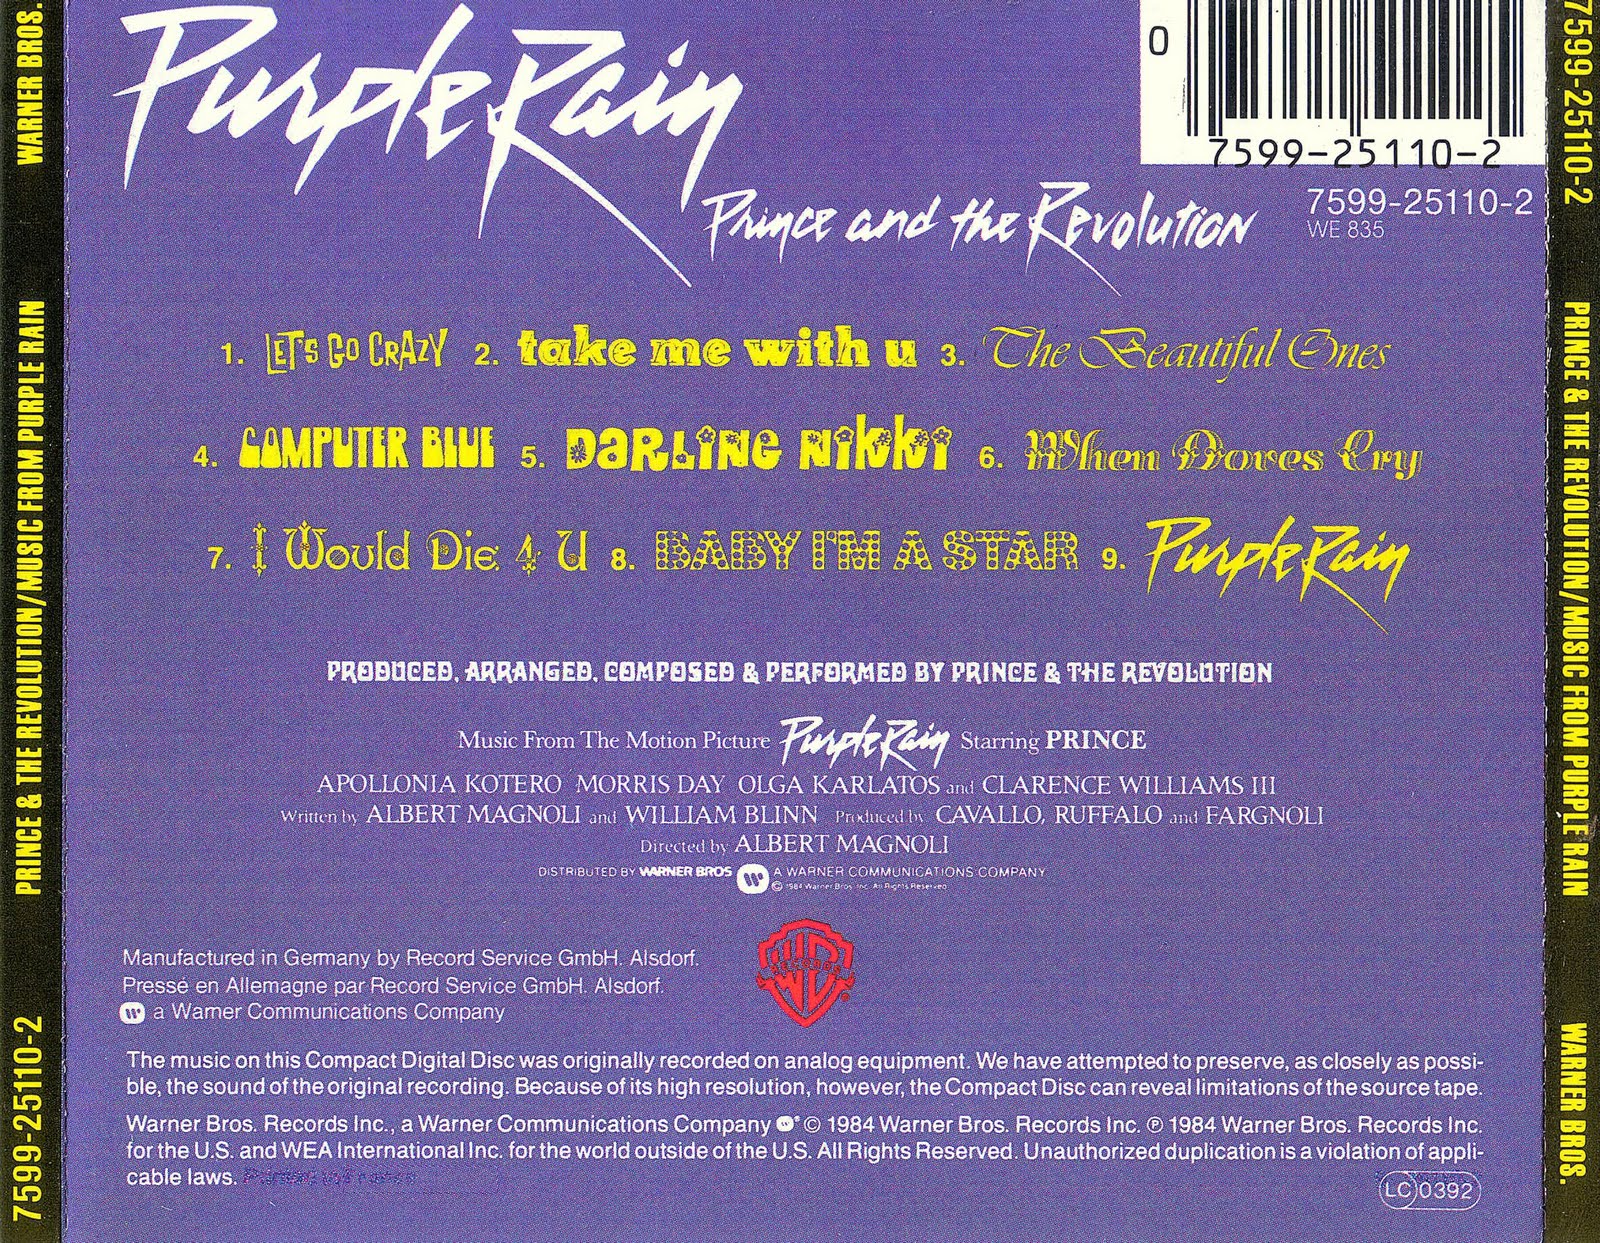 http://4.bp.blogspot.com/_FXxrq2X4po4/S_BF86Le47I/AAAAAAAAHS8/RjsSCZCEXxo/s1600/Prince+%26+The+Revolution+-+Music+From+Purple+Rain+-+Back.jpg